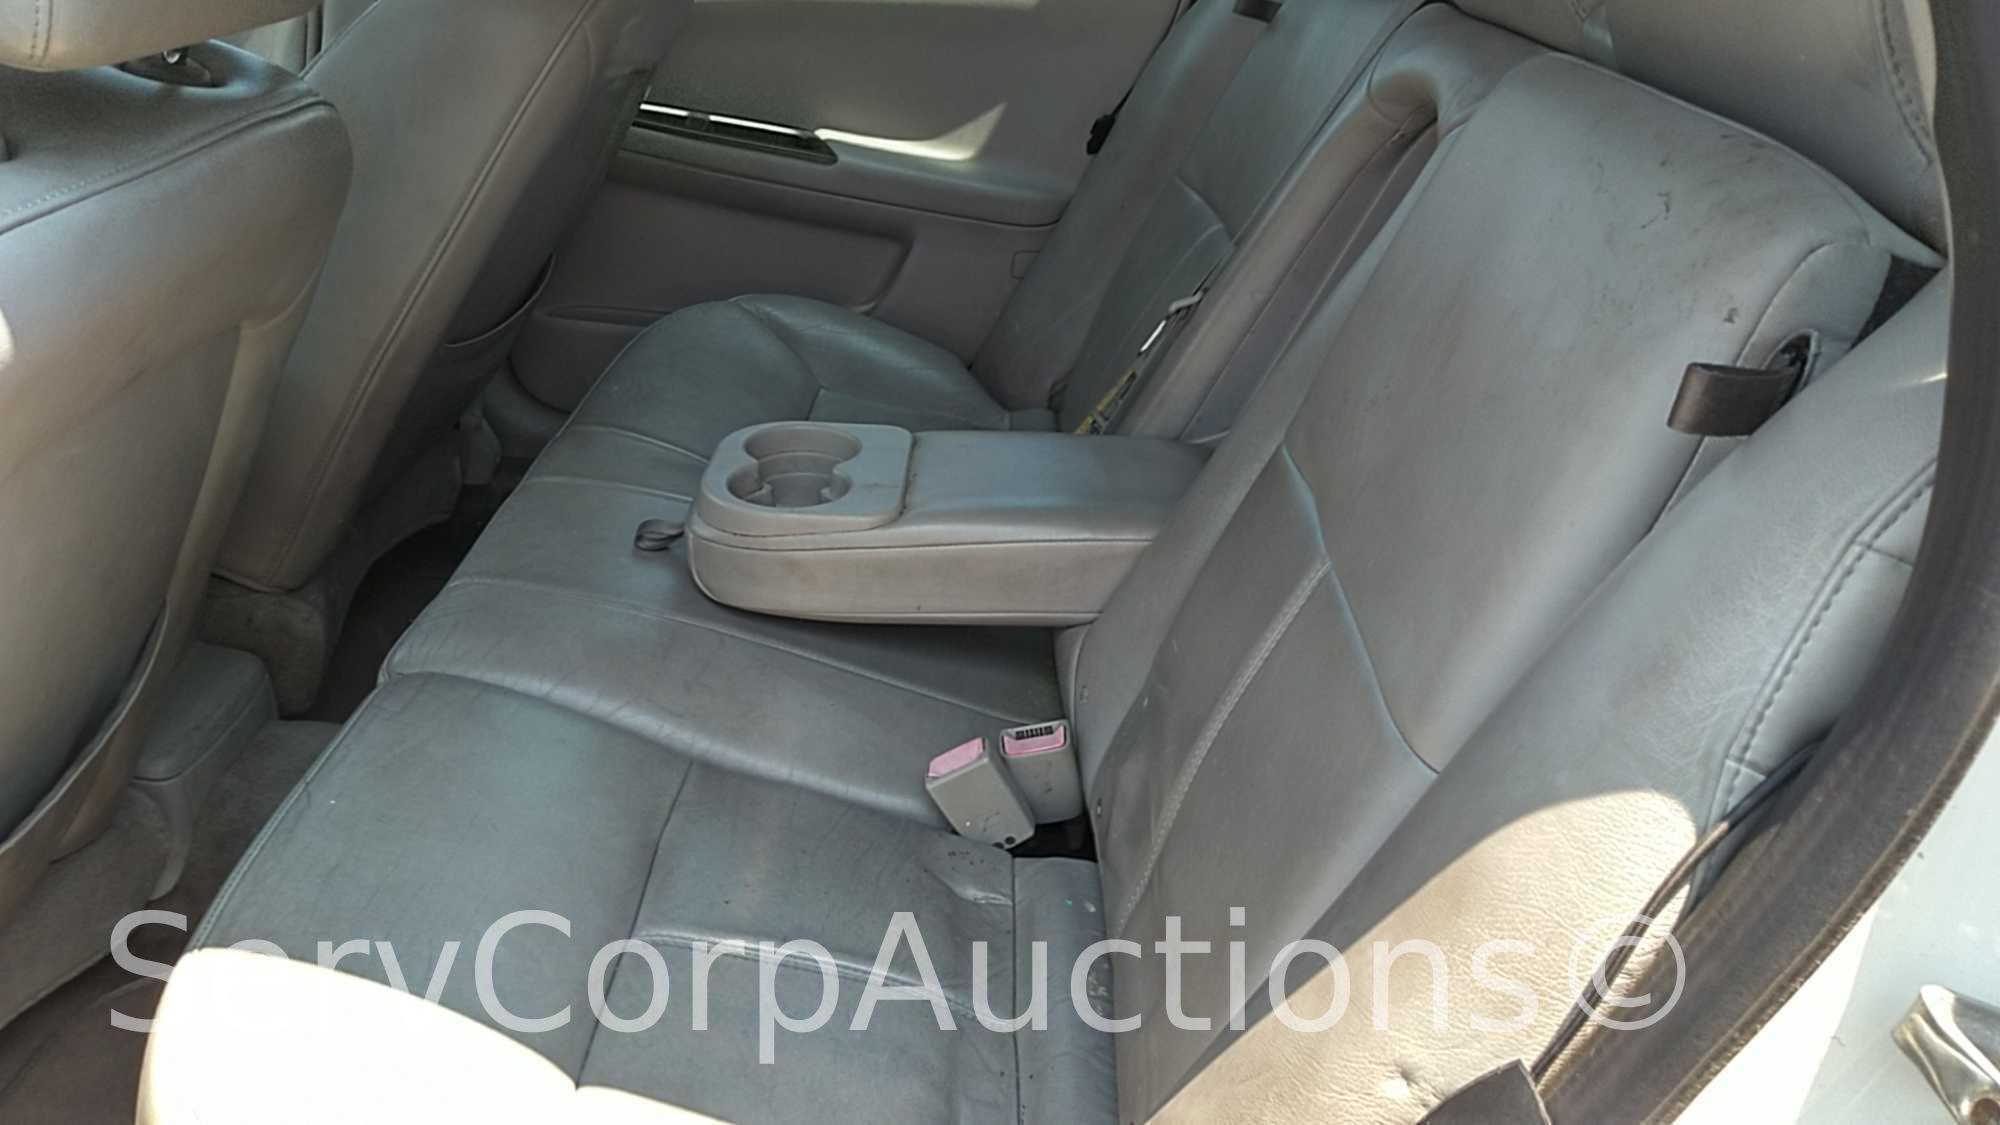 2007 Chevrolet Impala Passenger Car, VIN # 2G1WC58R979137853 Reconstructed